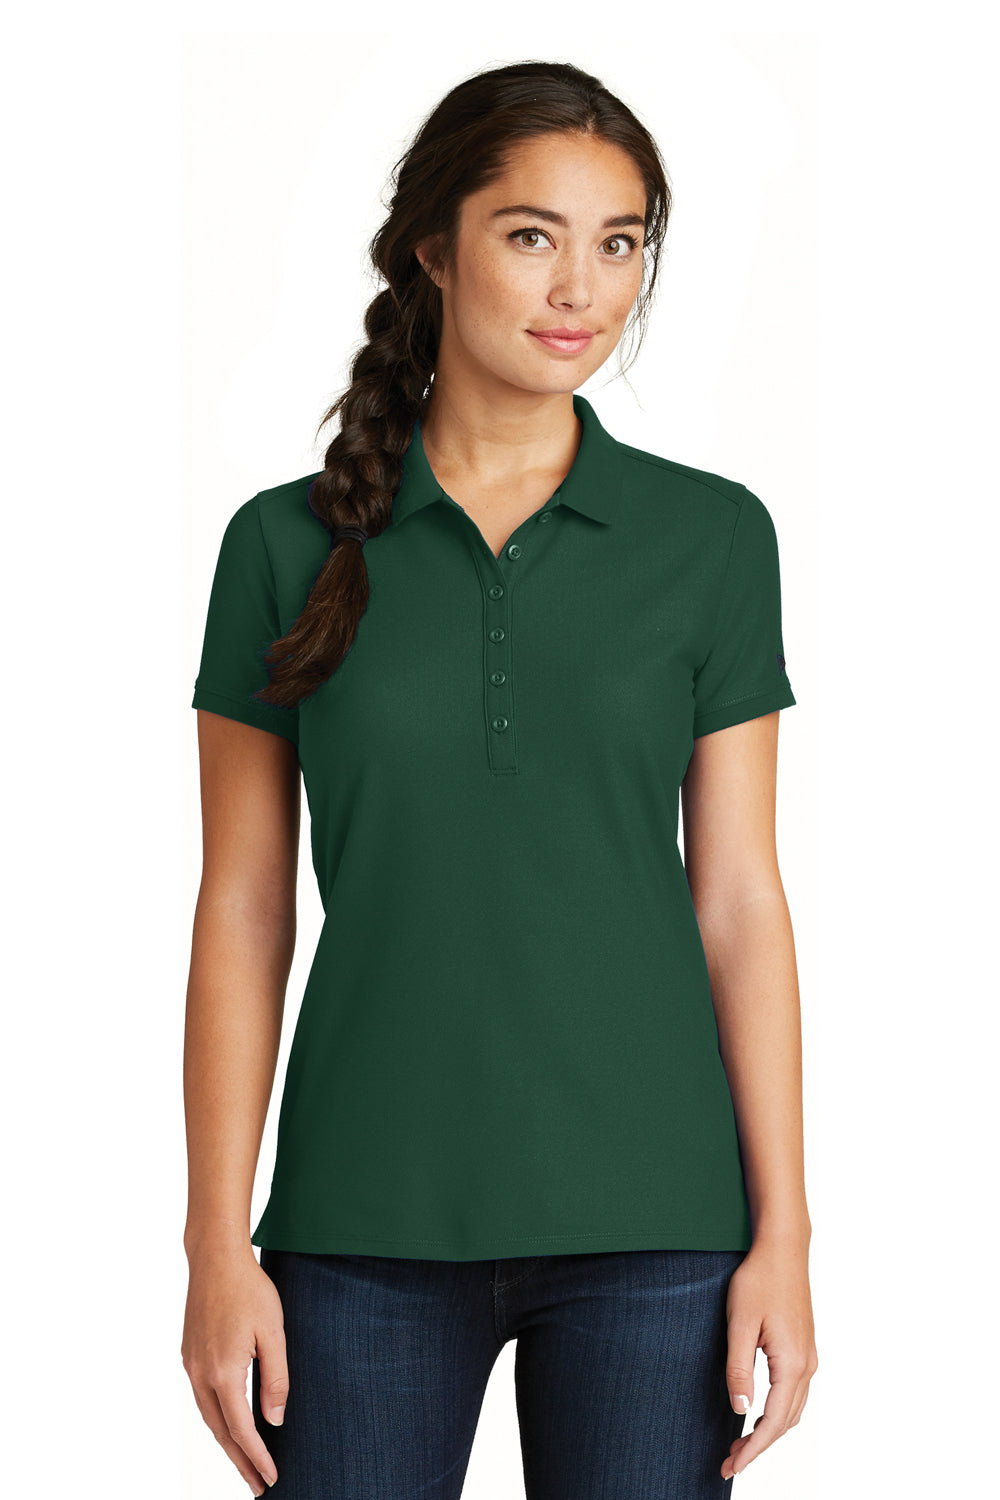 New Era LNEA300 Womens Venue Home Plate Moisture Wicking Short Sleeve Polo Shirt Forest Green Front